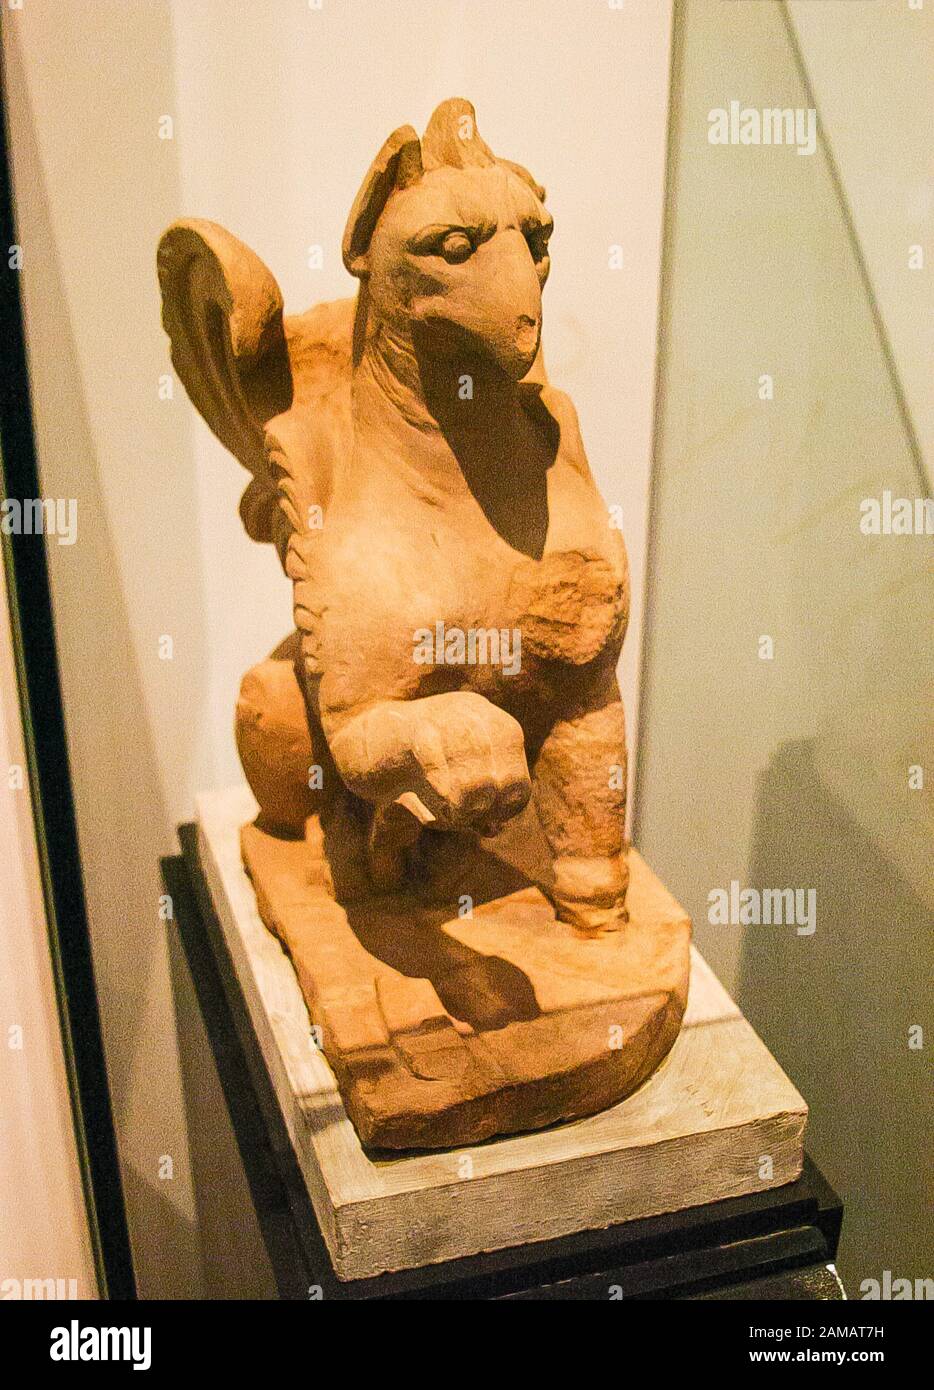 Egypt, Alexandria, National Museum, a griffon, a mix of lion and bird. Stock Photo